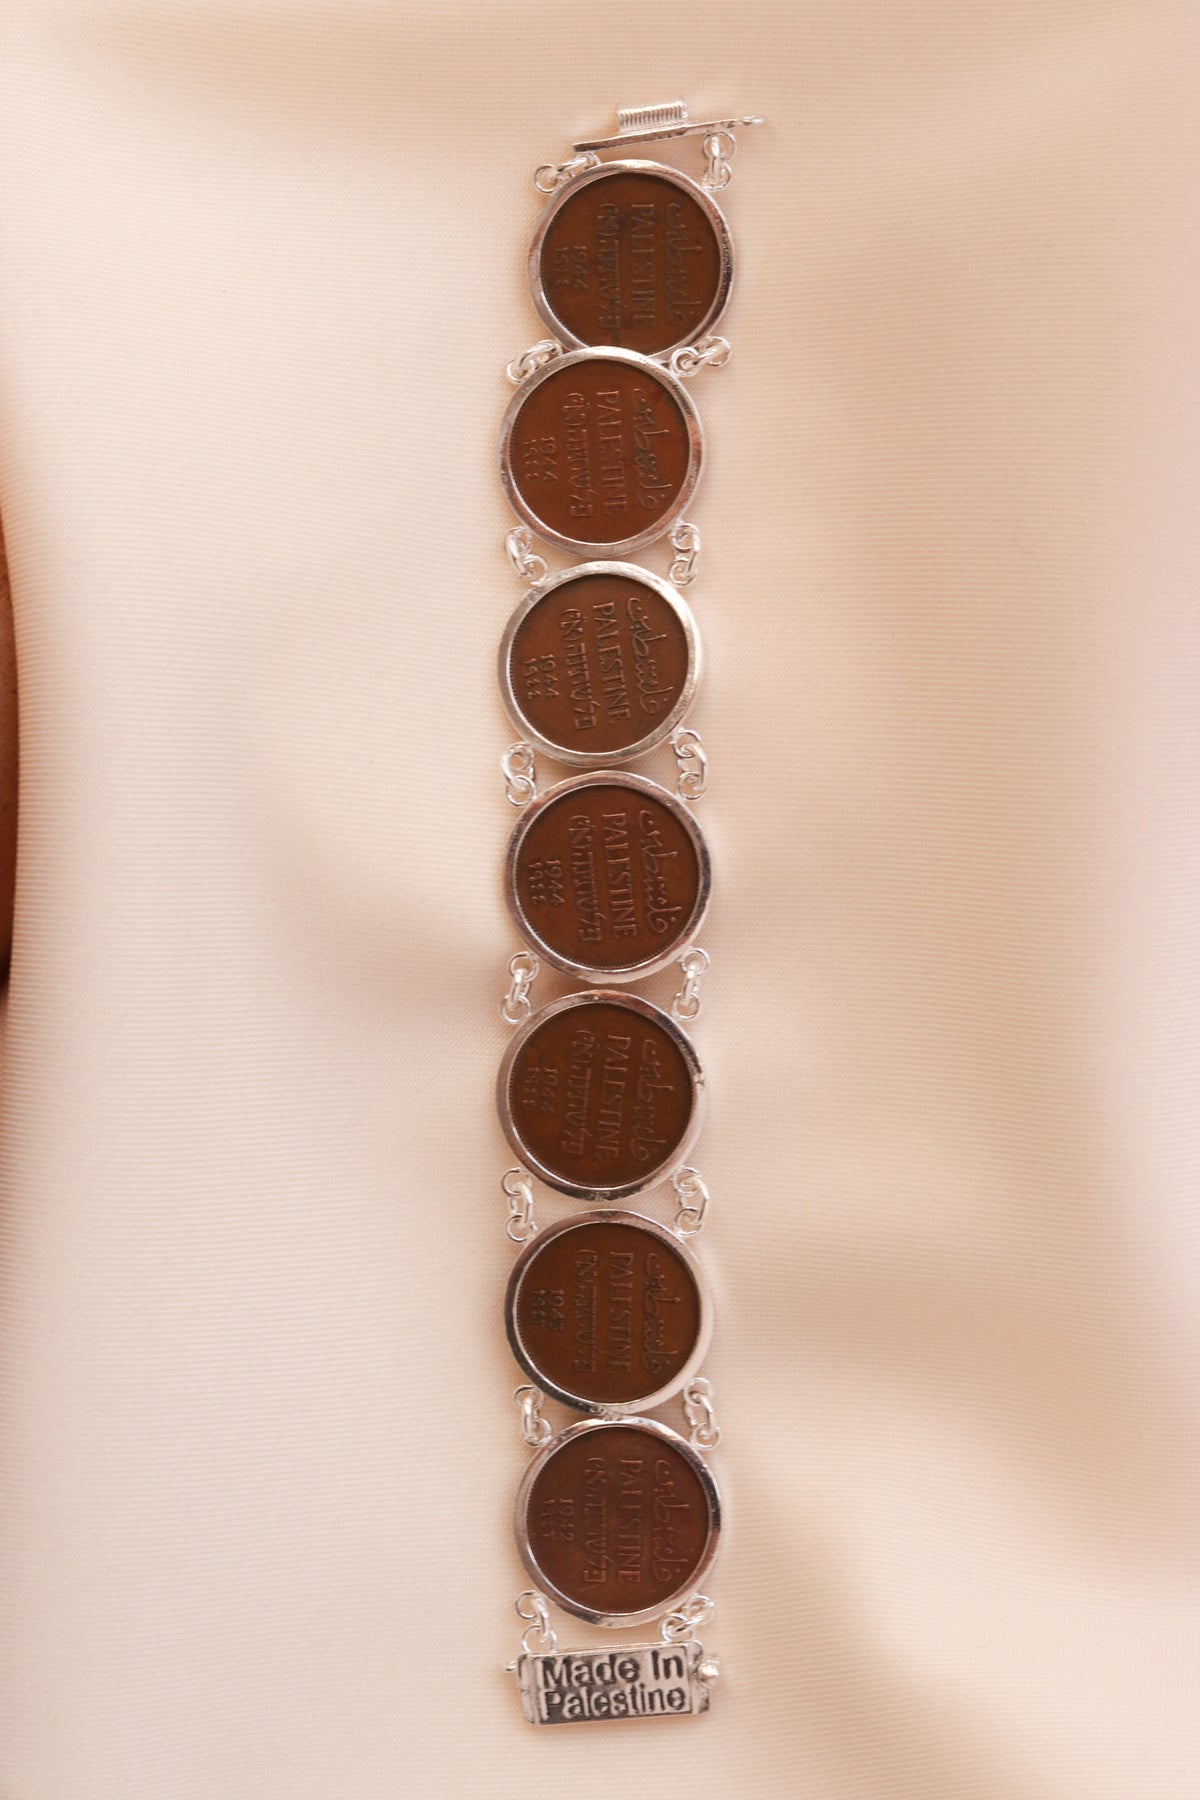 Palestinian coins 1 mil bracelet